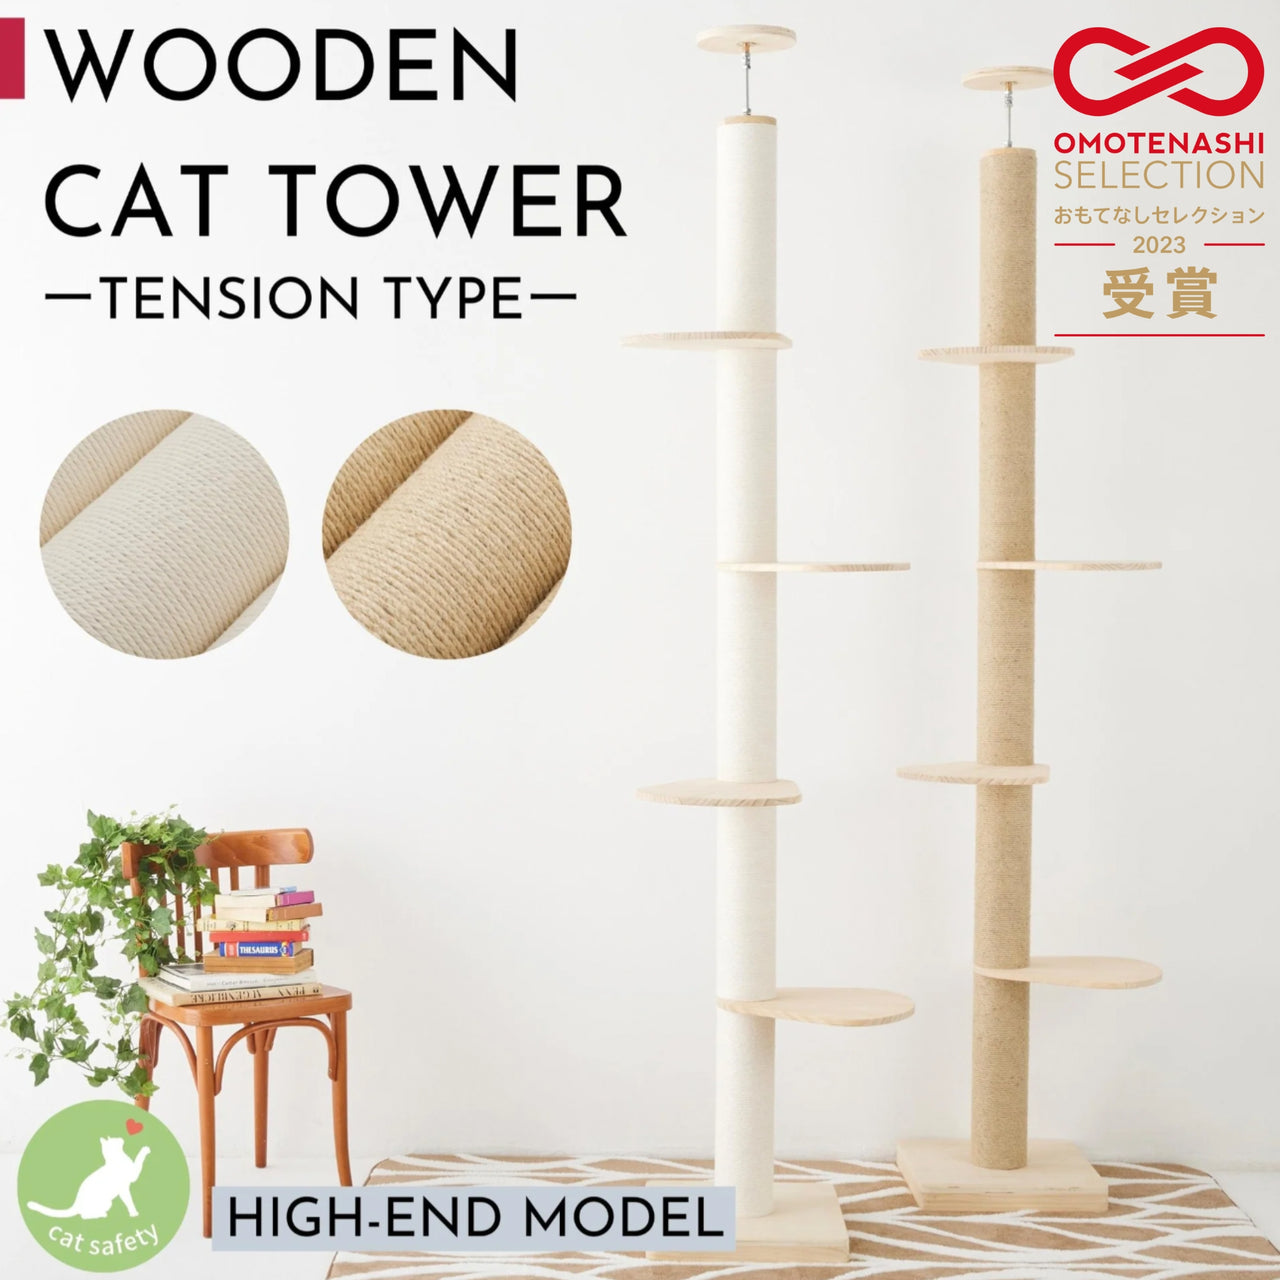 SUMIKA キミの木シリーズ 突っ張り型木製キャットタワー 【ハイエンドモデル】